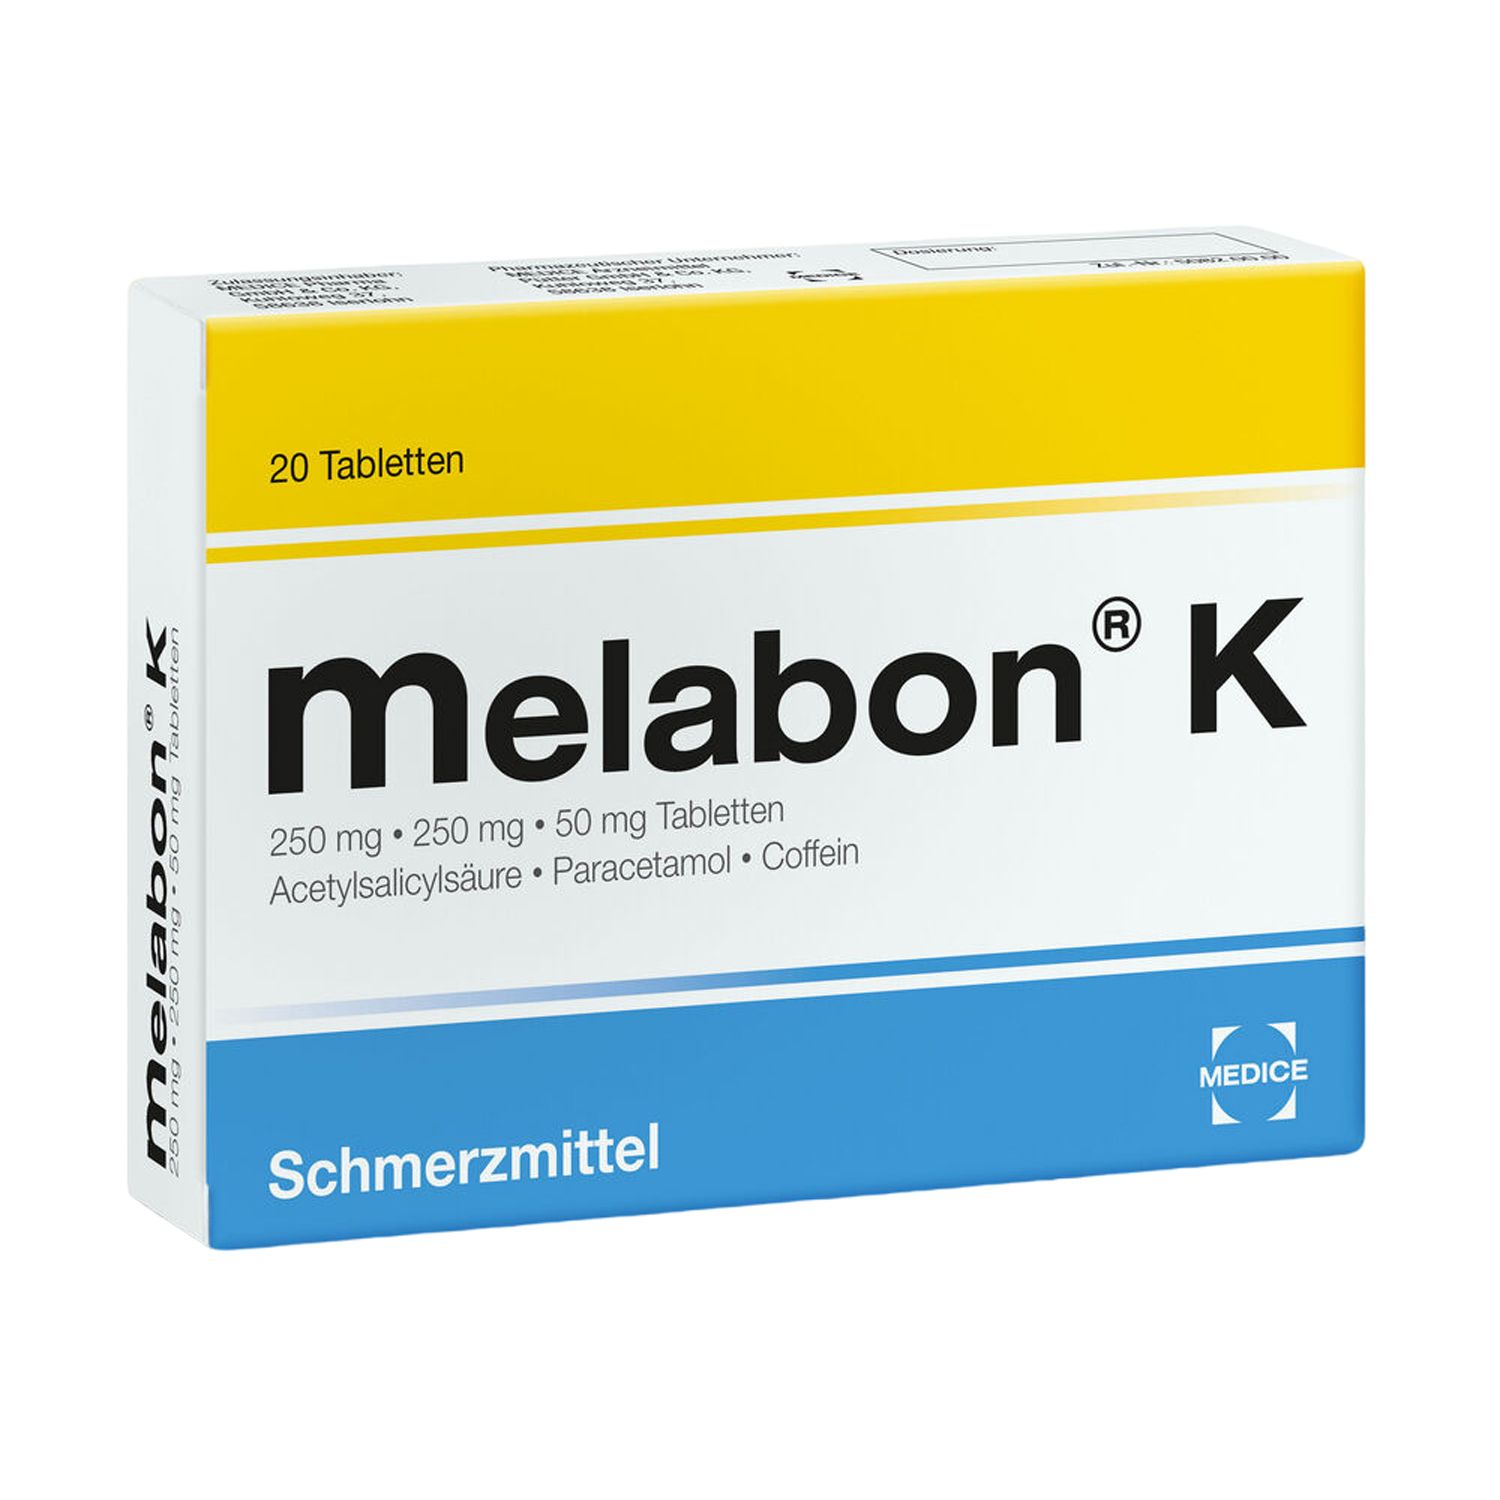 Melabon K bei Kopfschmerzen und Zahnschmerzen